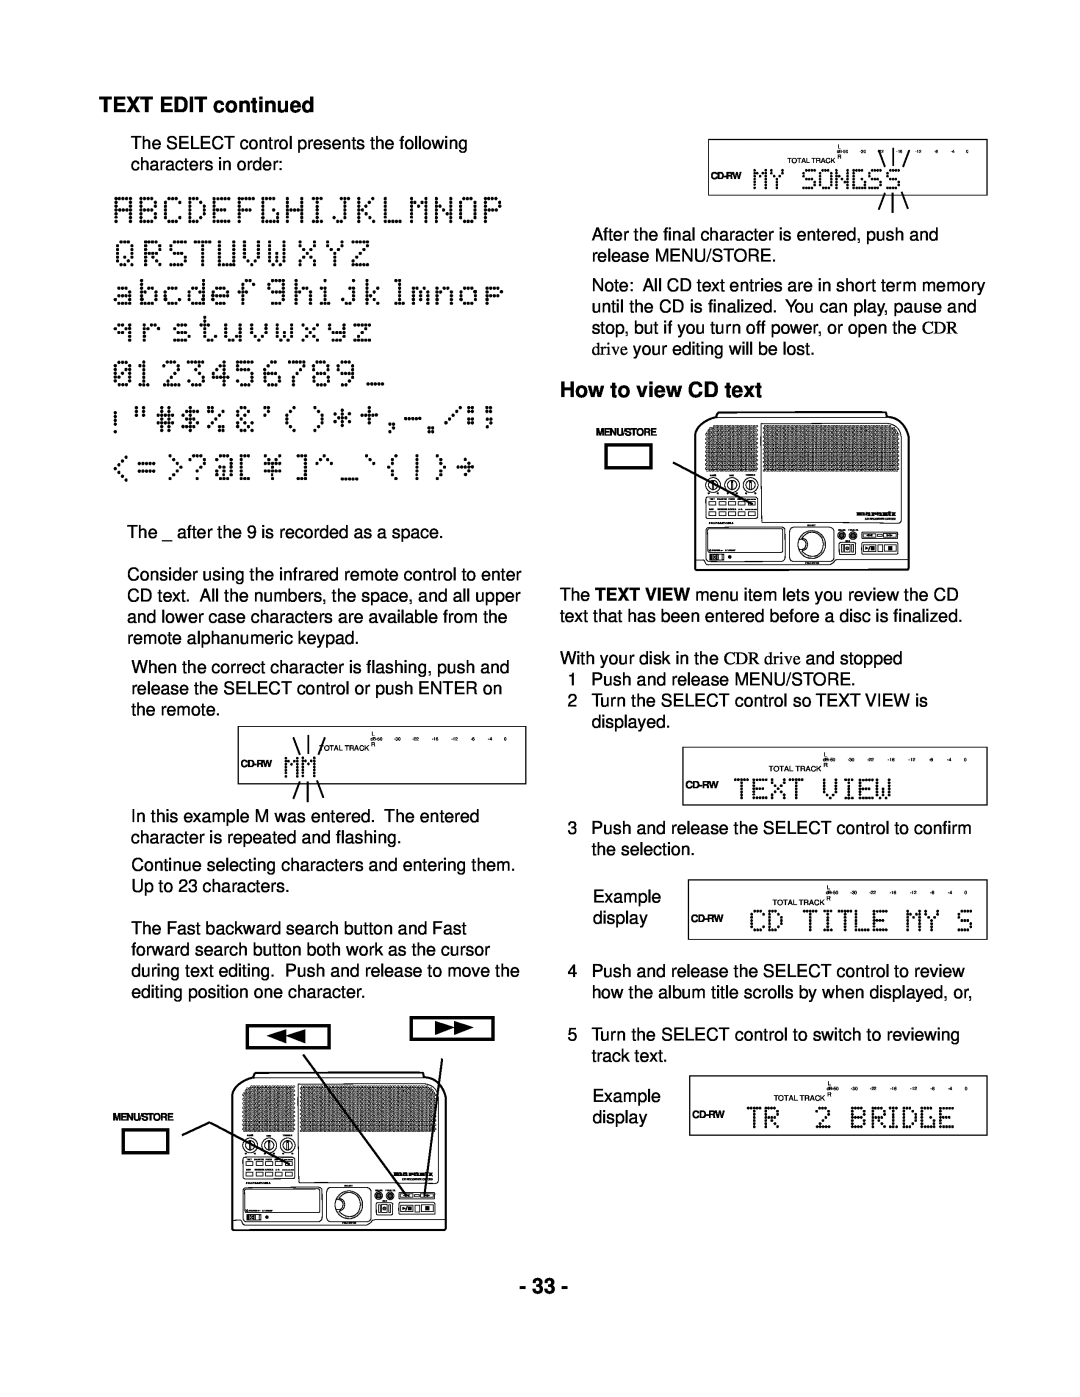 Marantz CDR300 manual TEXT EDIT continued, How to view CD text 